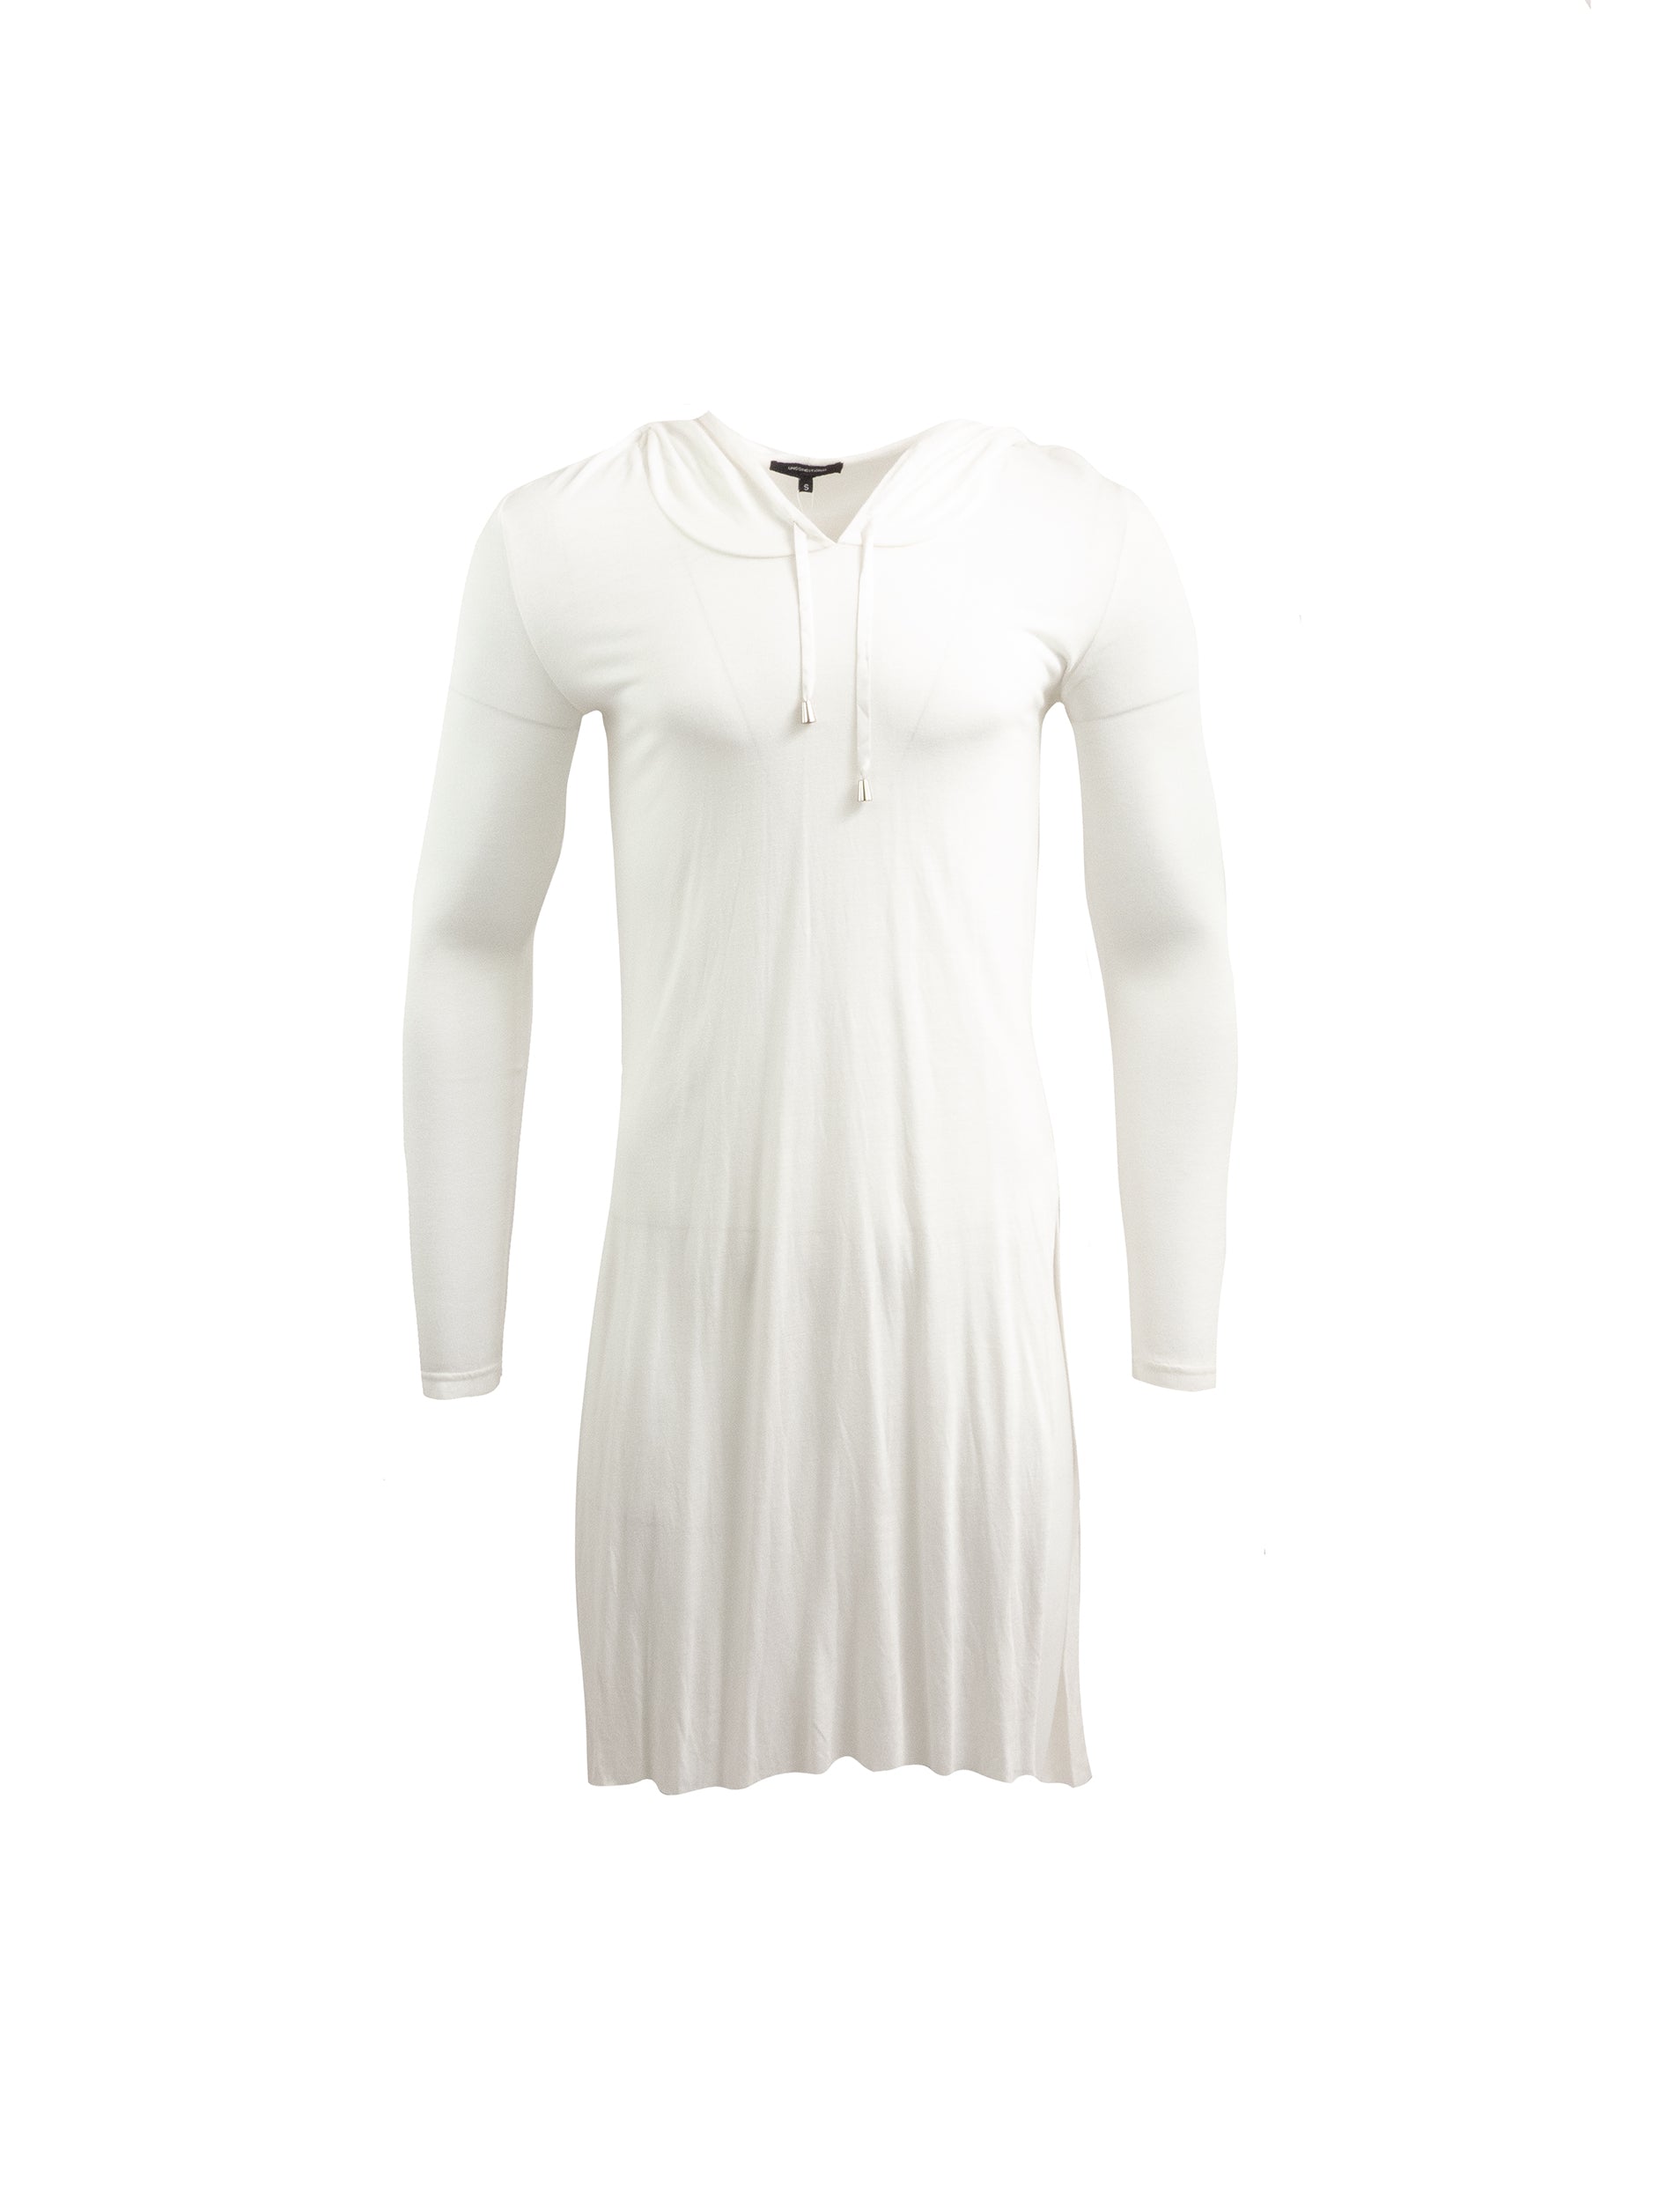 WHITE RAYON JERSEY HOODED DRESS